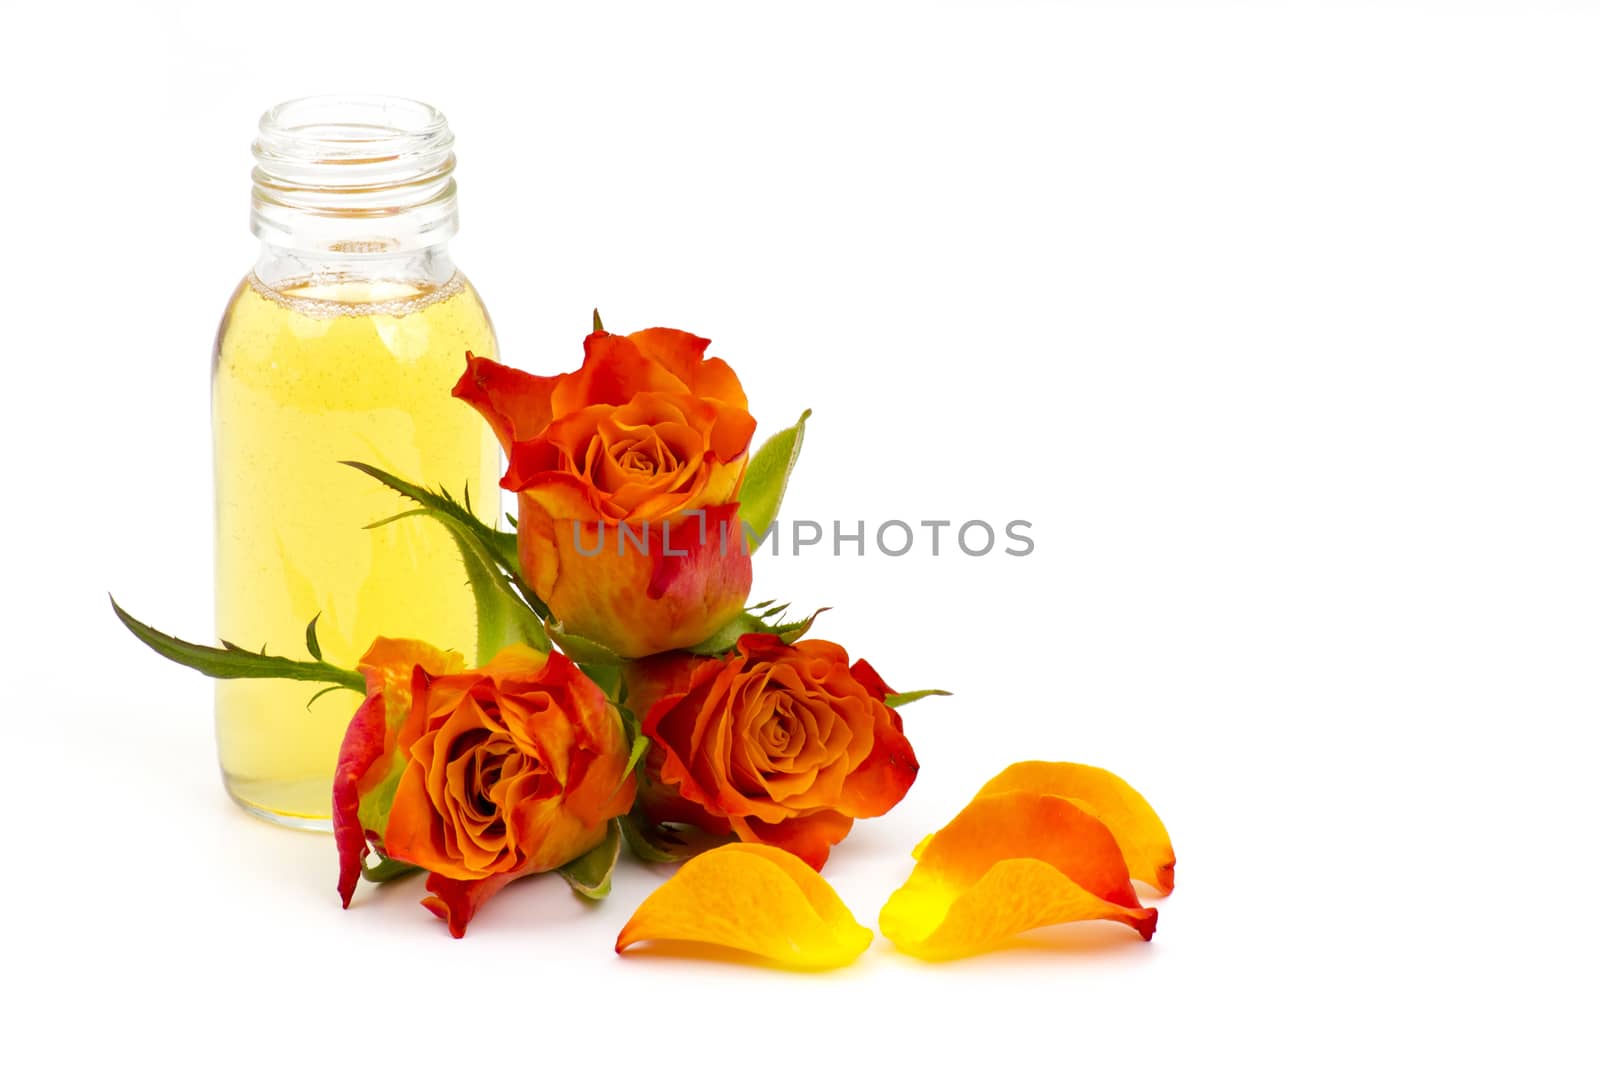 bath oil and orange roses on white background